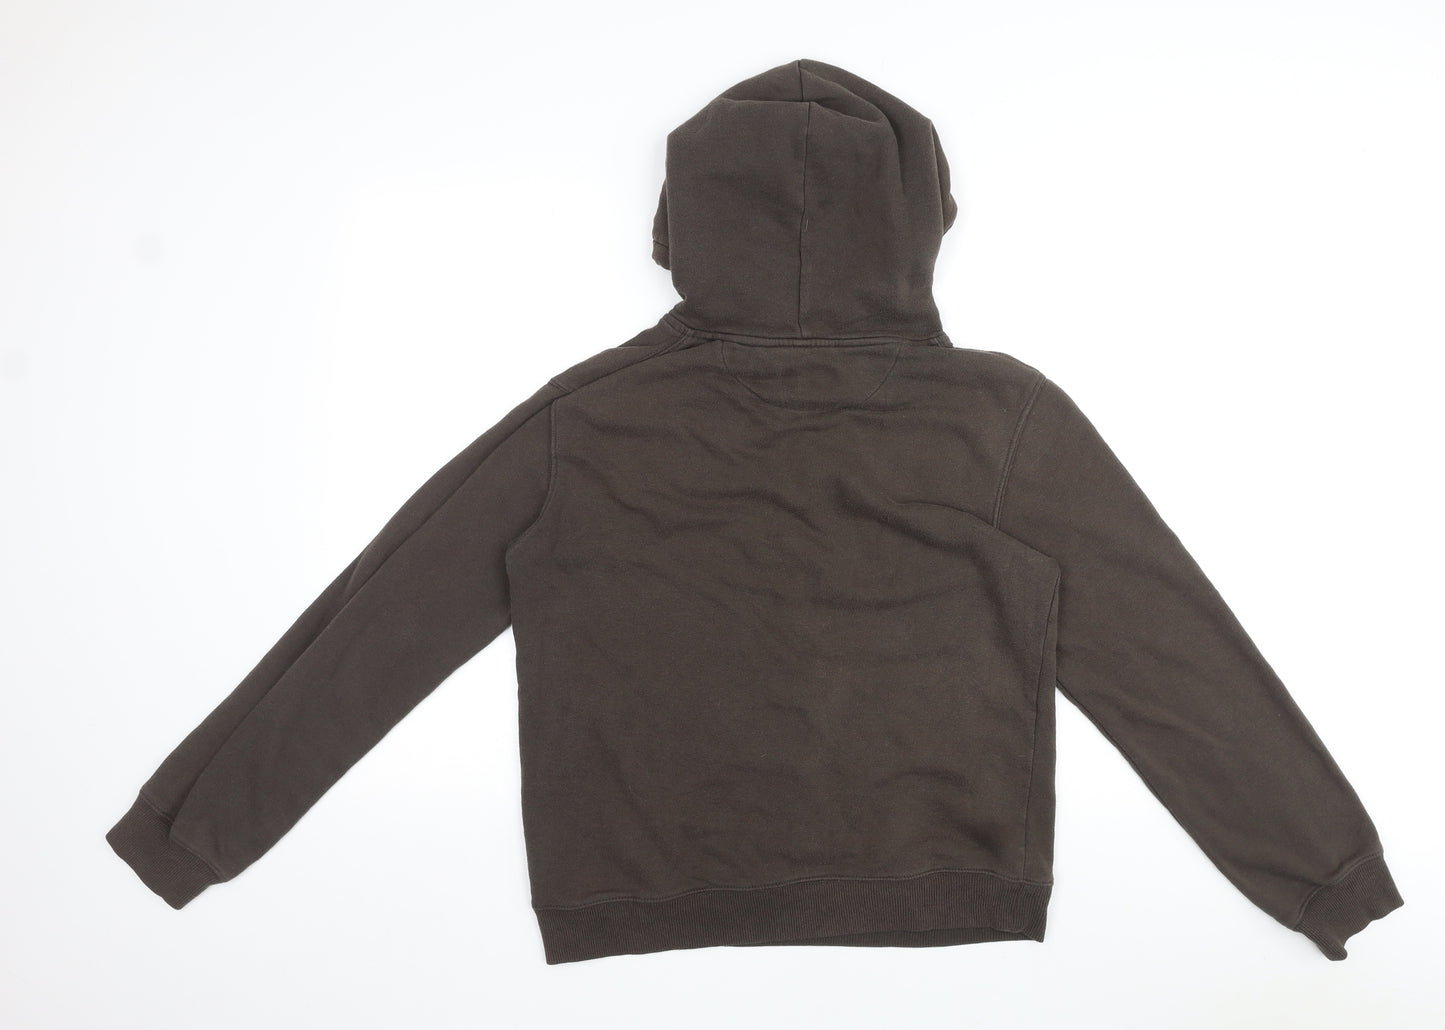 Brixton Mens Brown Cotton Pullover Hoodie Size S - Logo, Pocket, Drawstring